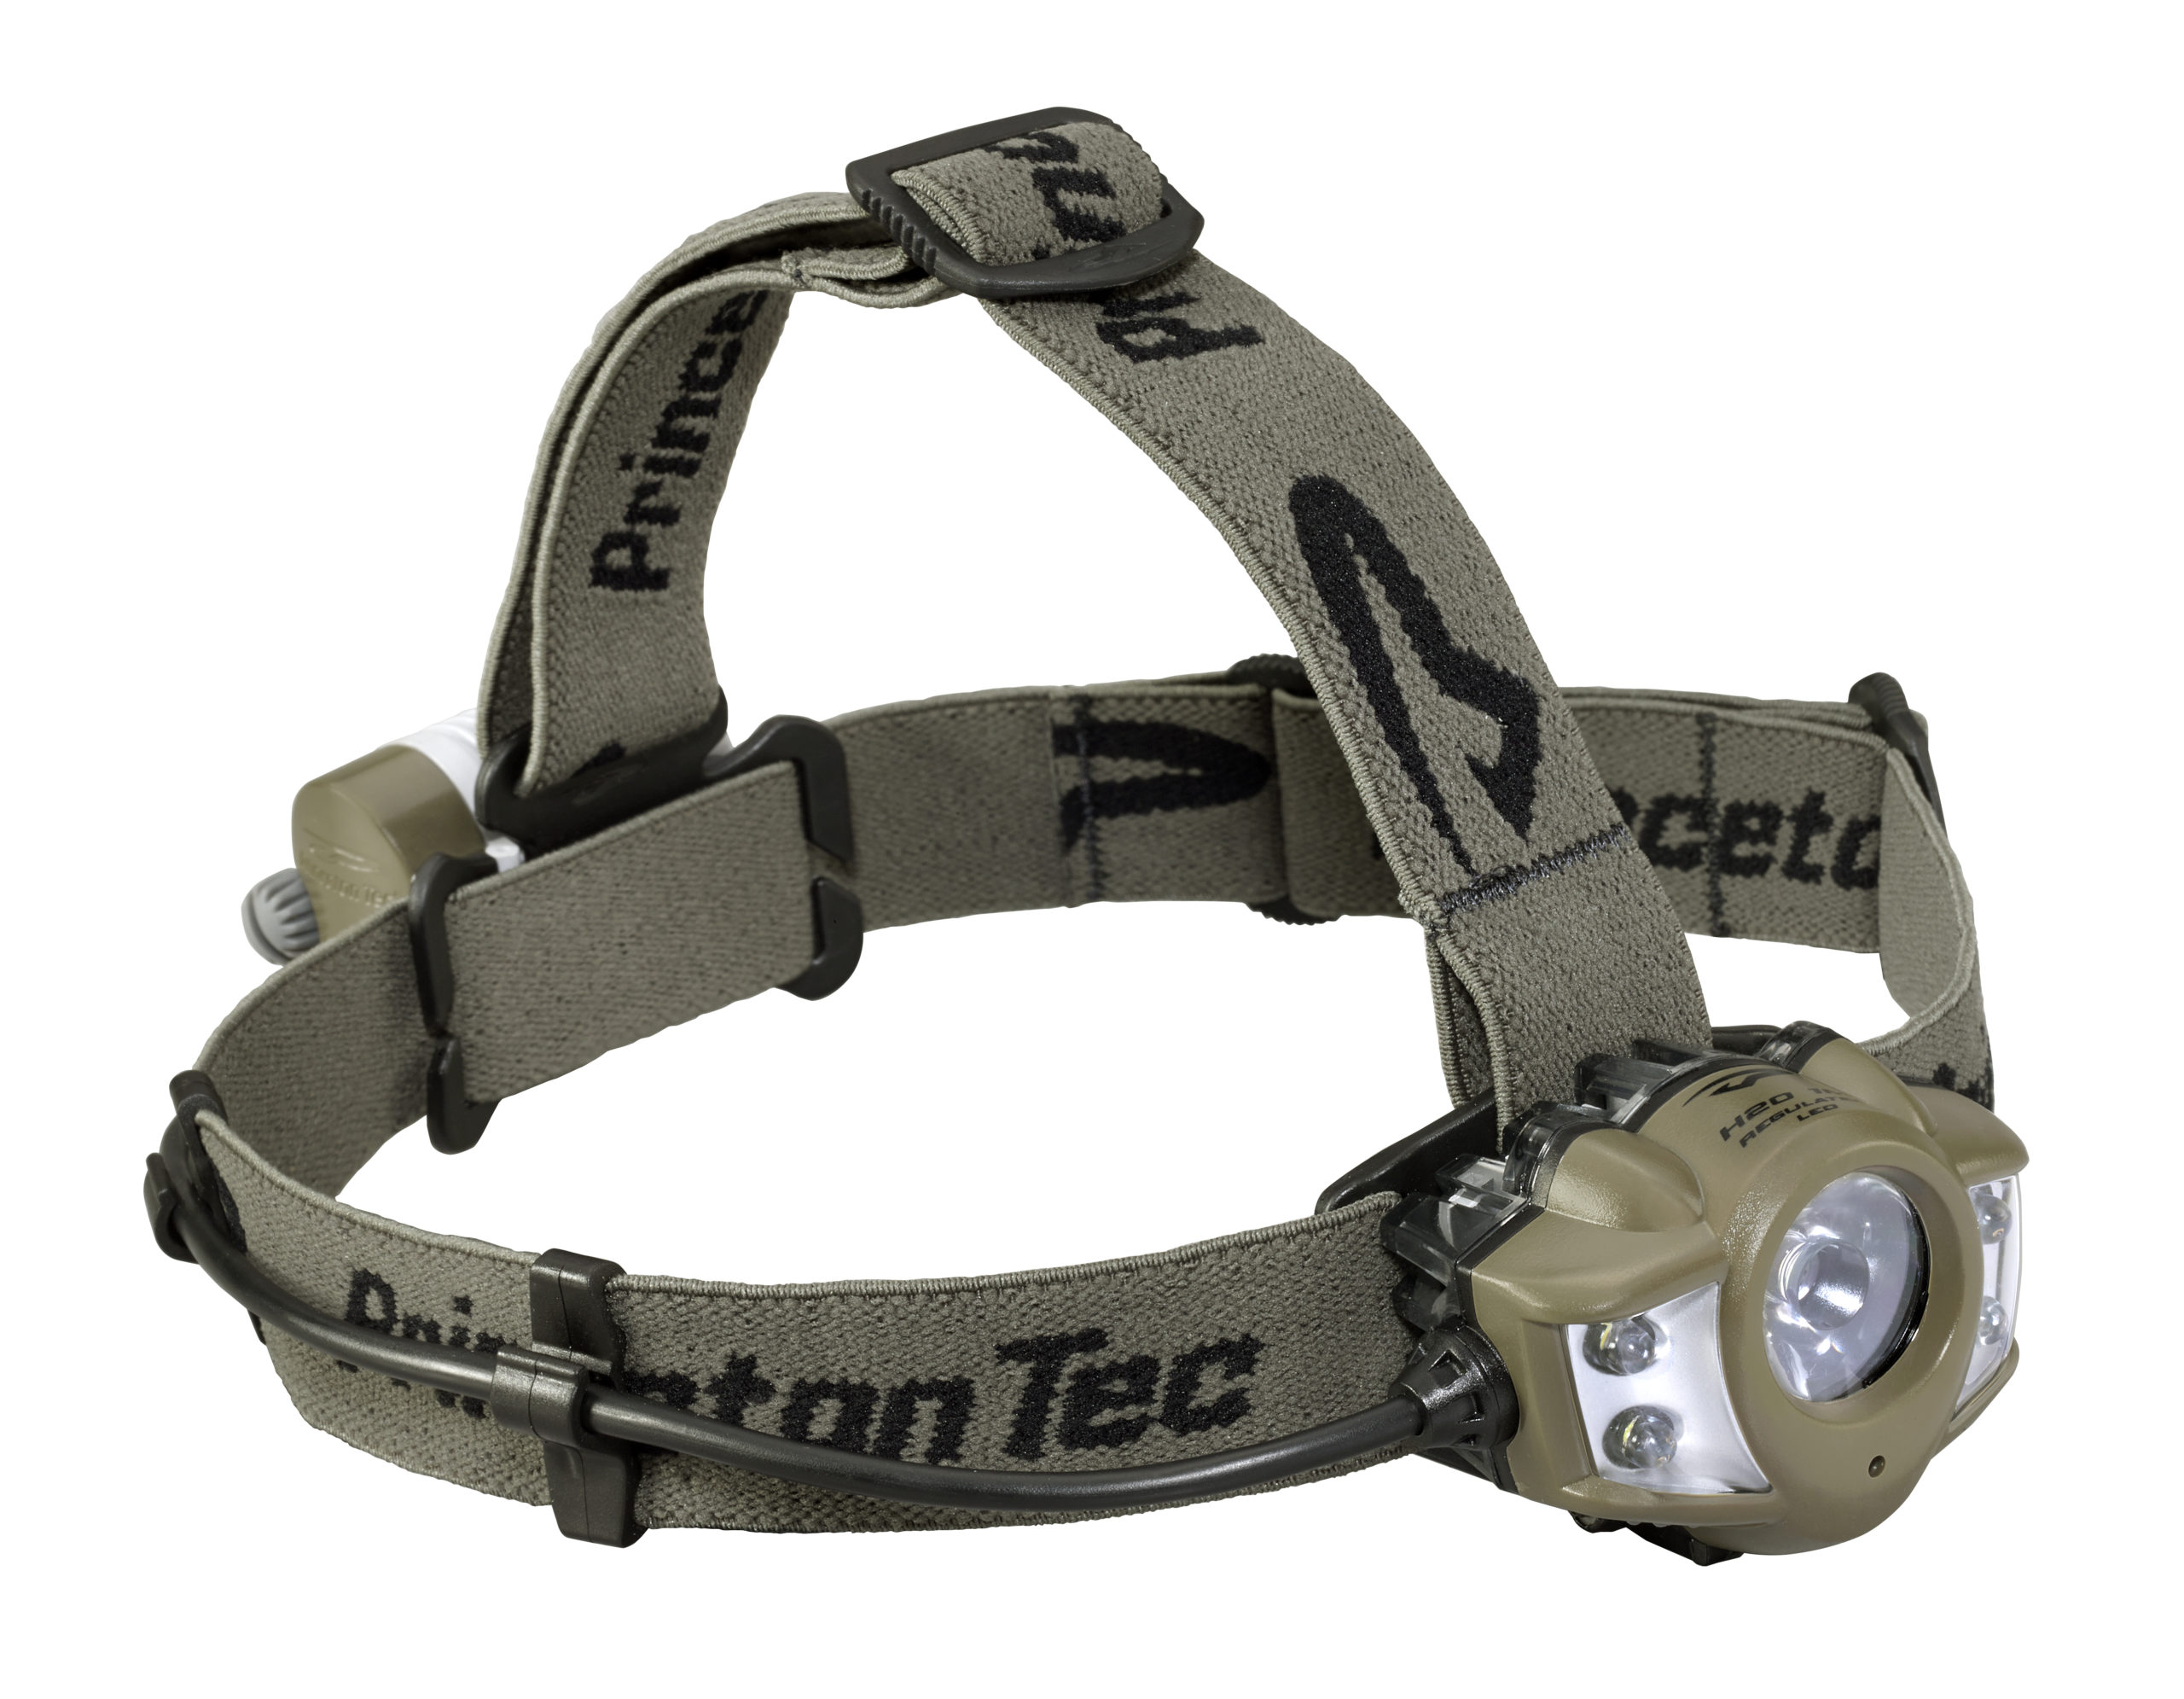 Princeton Tec Apex. Led Headlamp Pro. Princeton Tec charge. Princeton Tec лого. Apex led